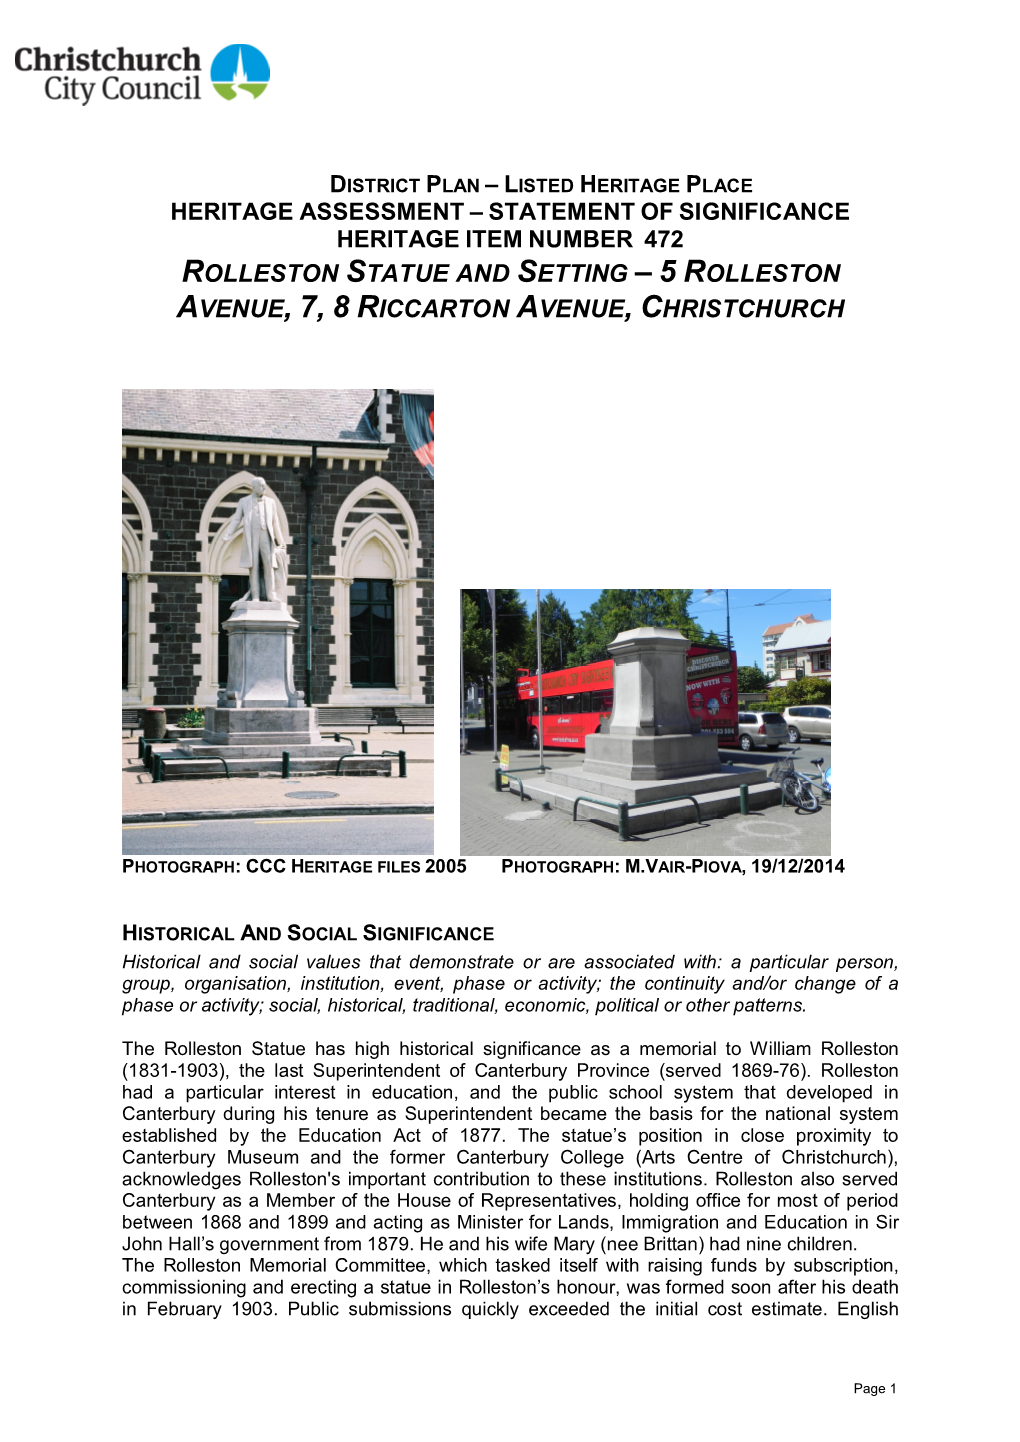 Rolleston Statue and Setting – 5 Rolleston Avenue, 7, 8 Riccarton Avenue,Christchurch